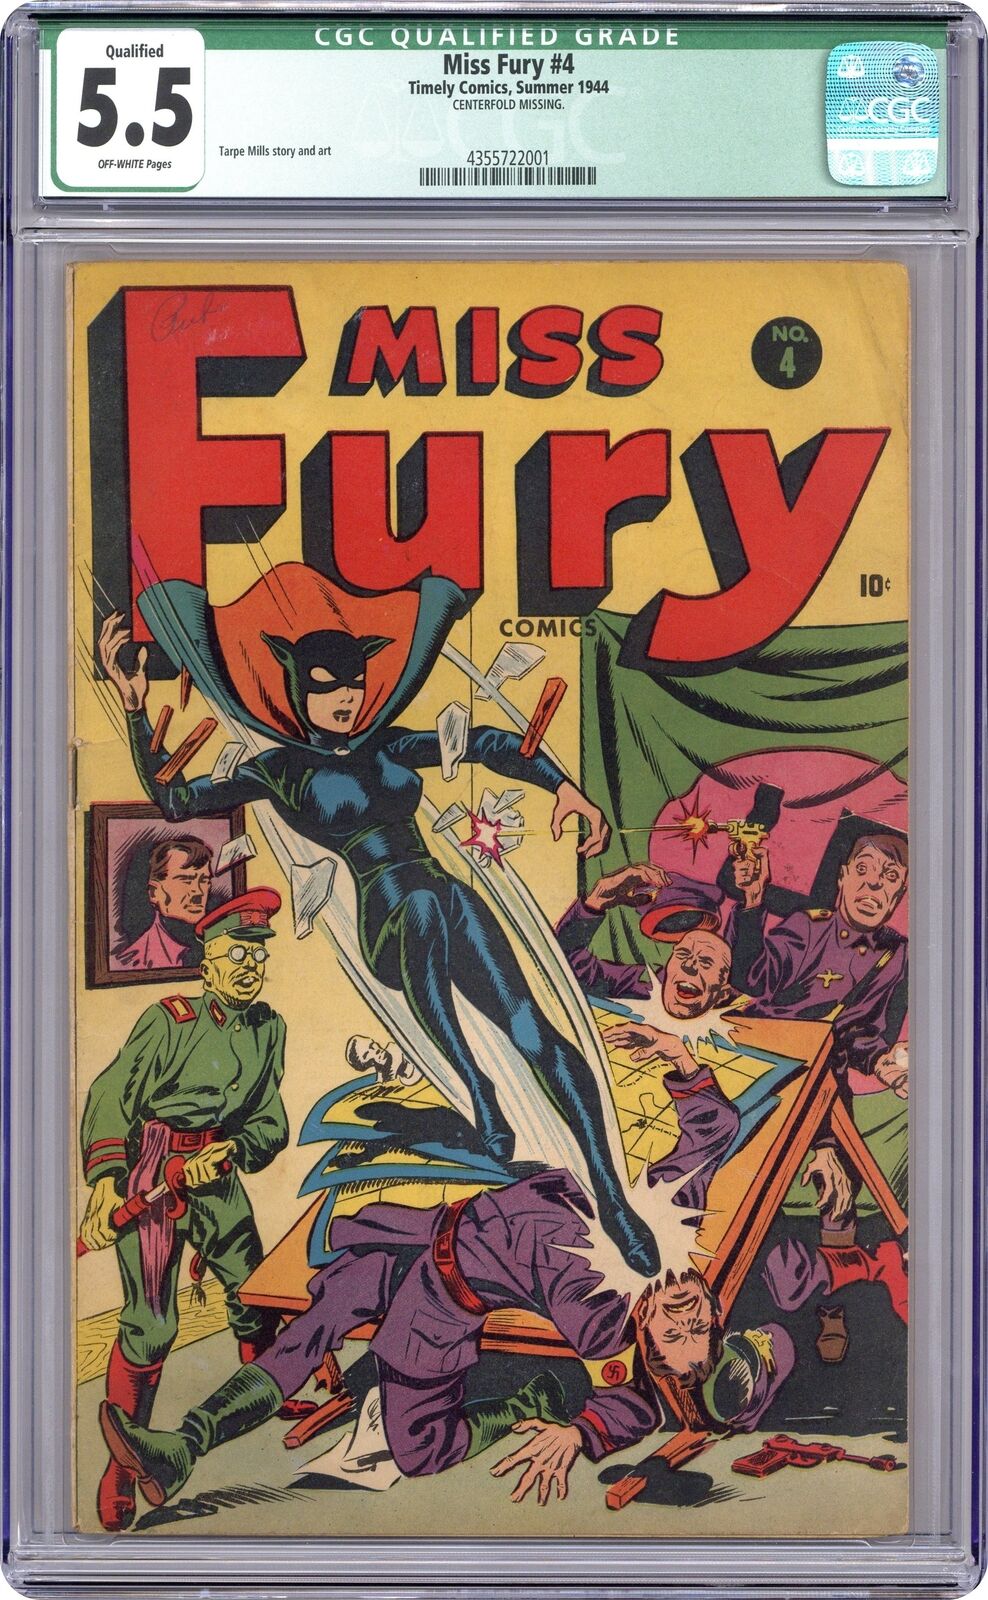 Miss Fury Comics #4 CGC 5.5 QUALIFIED 1944 4355722001